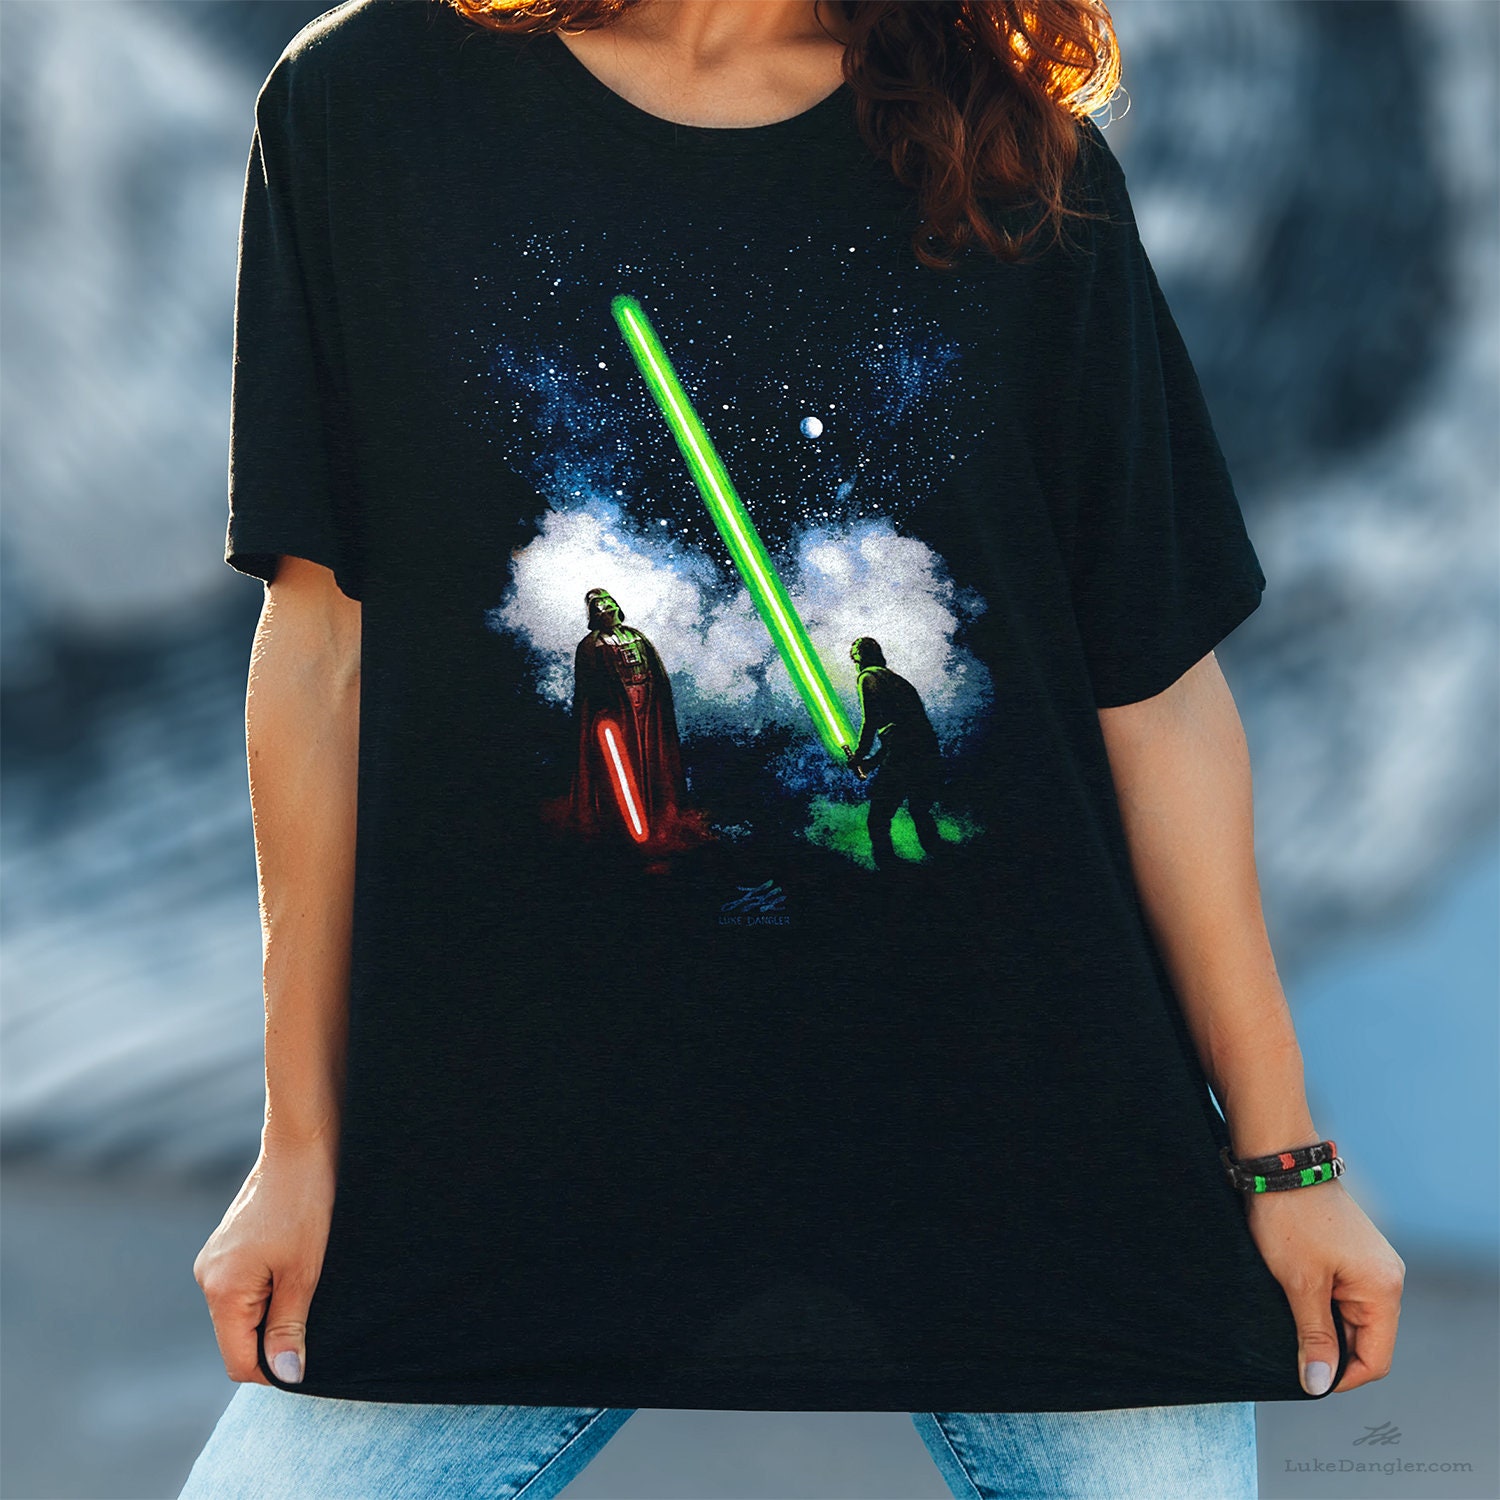 Buy Funny Star Wars Shirt Impressive Lightsaber Star Wars Online in India -  Etsy